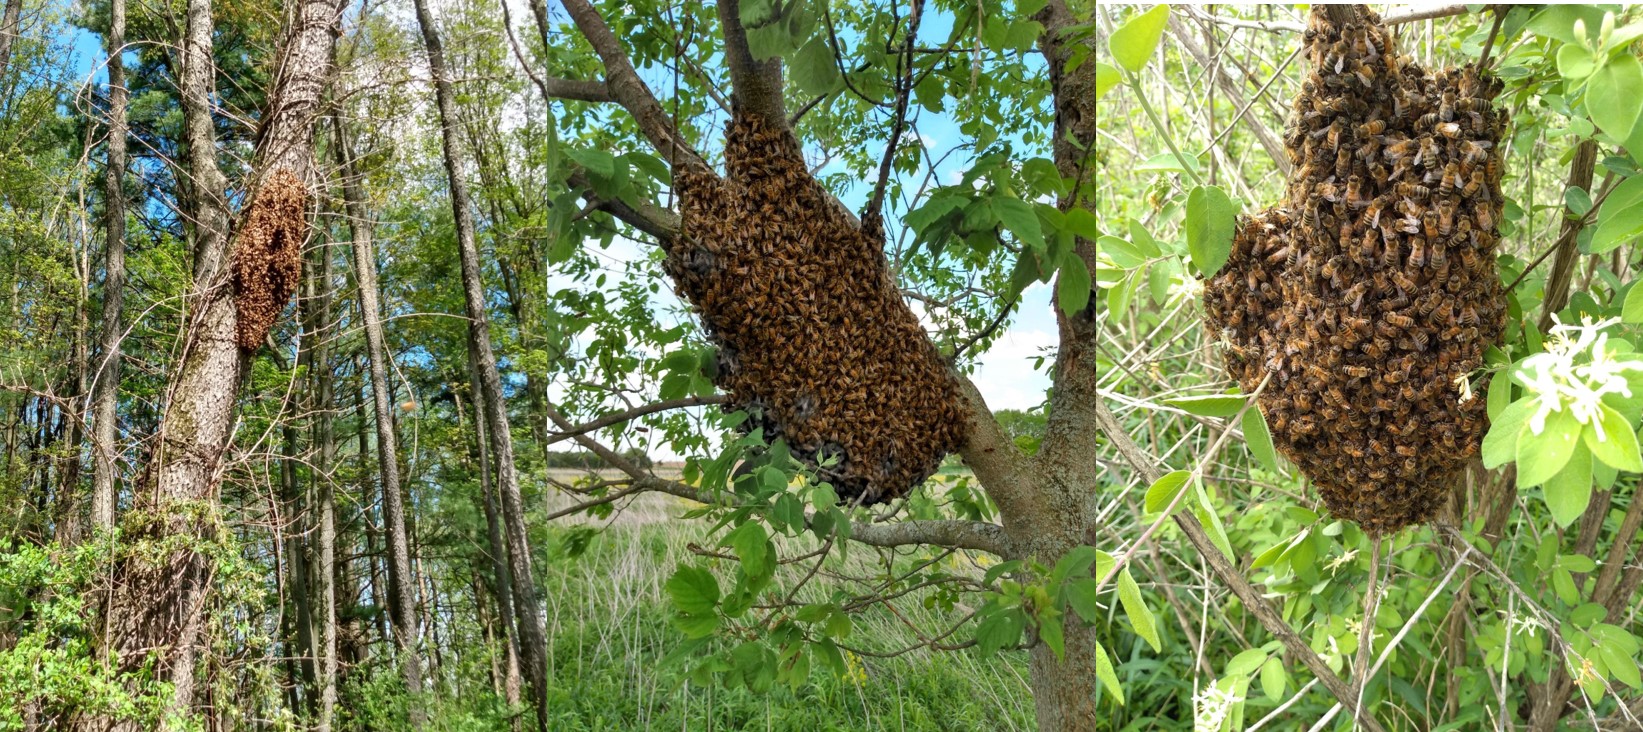 Honey bee swarms in trees.